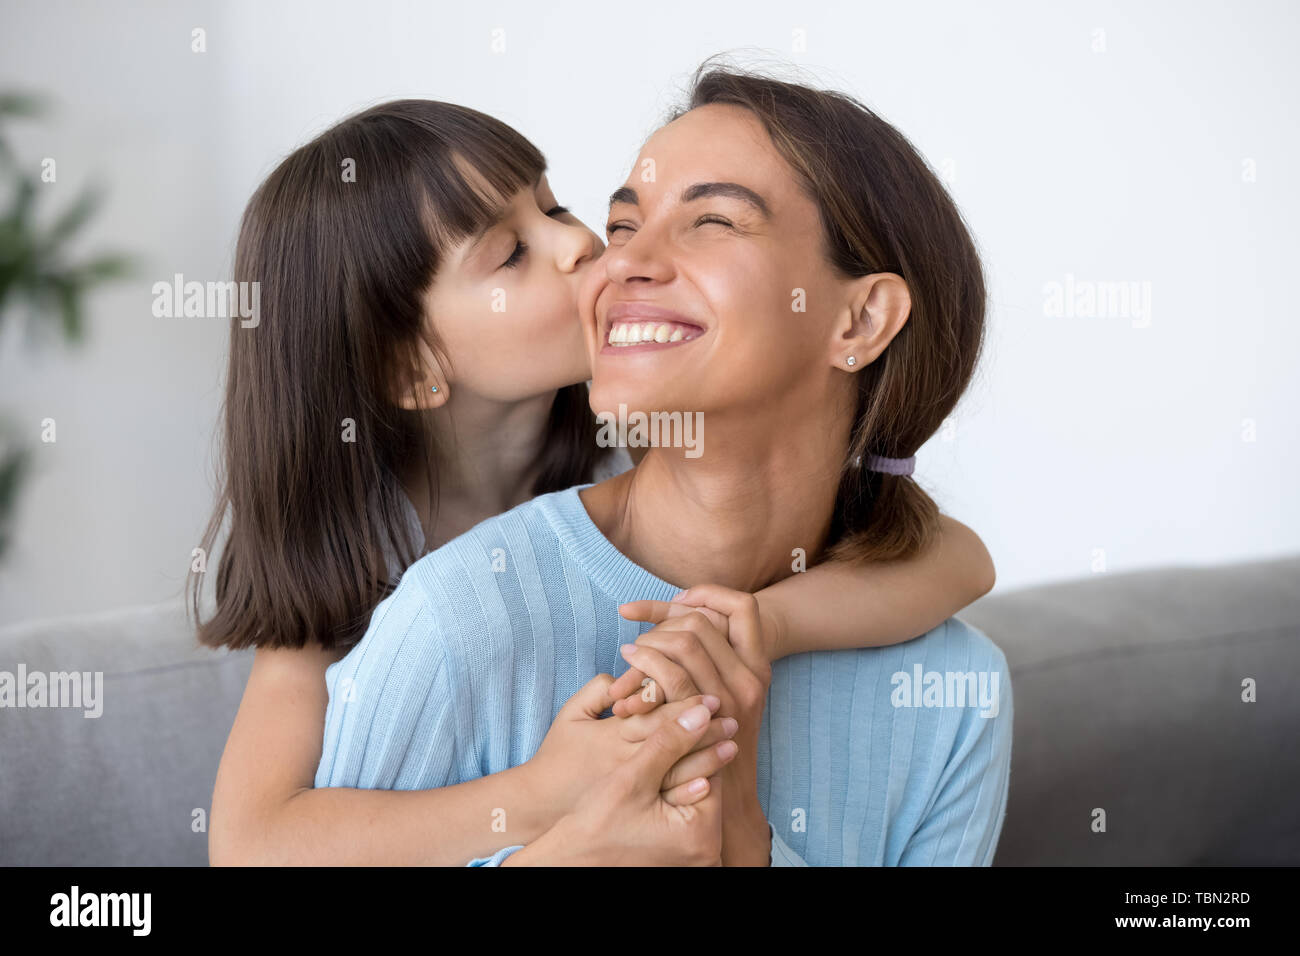 Cute little daughter kiss happy mom on cheek Stock Photo